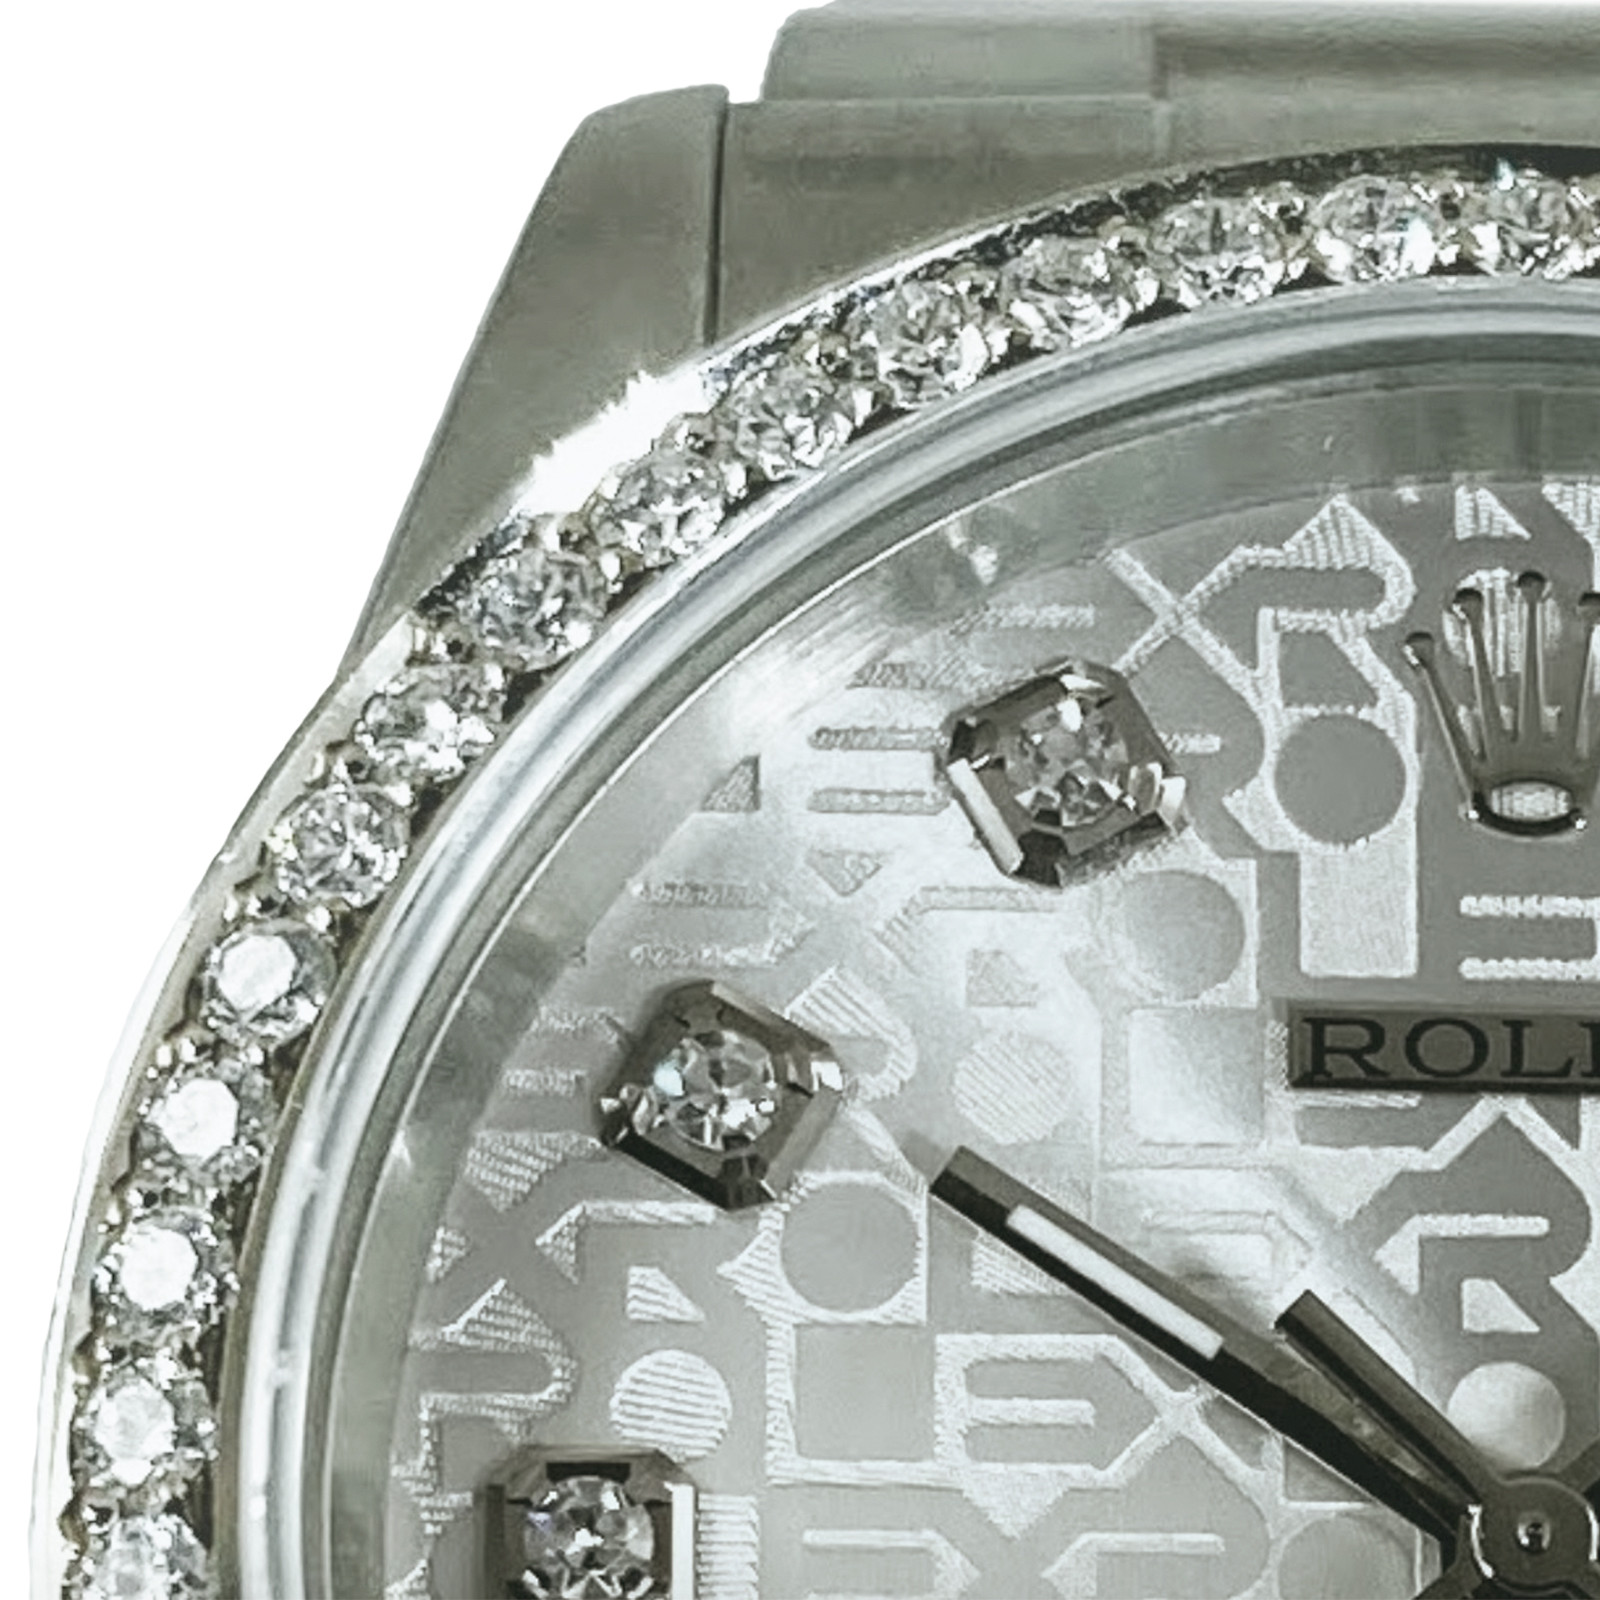 Diamond Rolex Datejust Model 16234